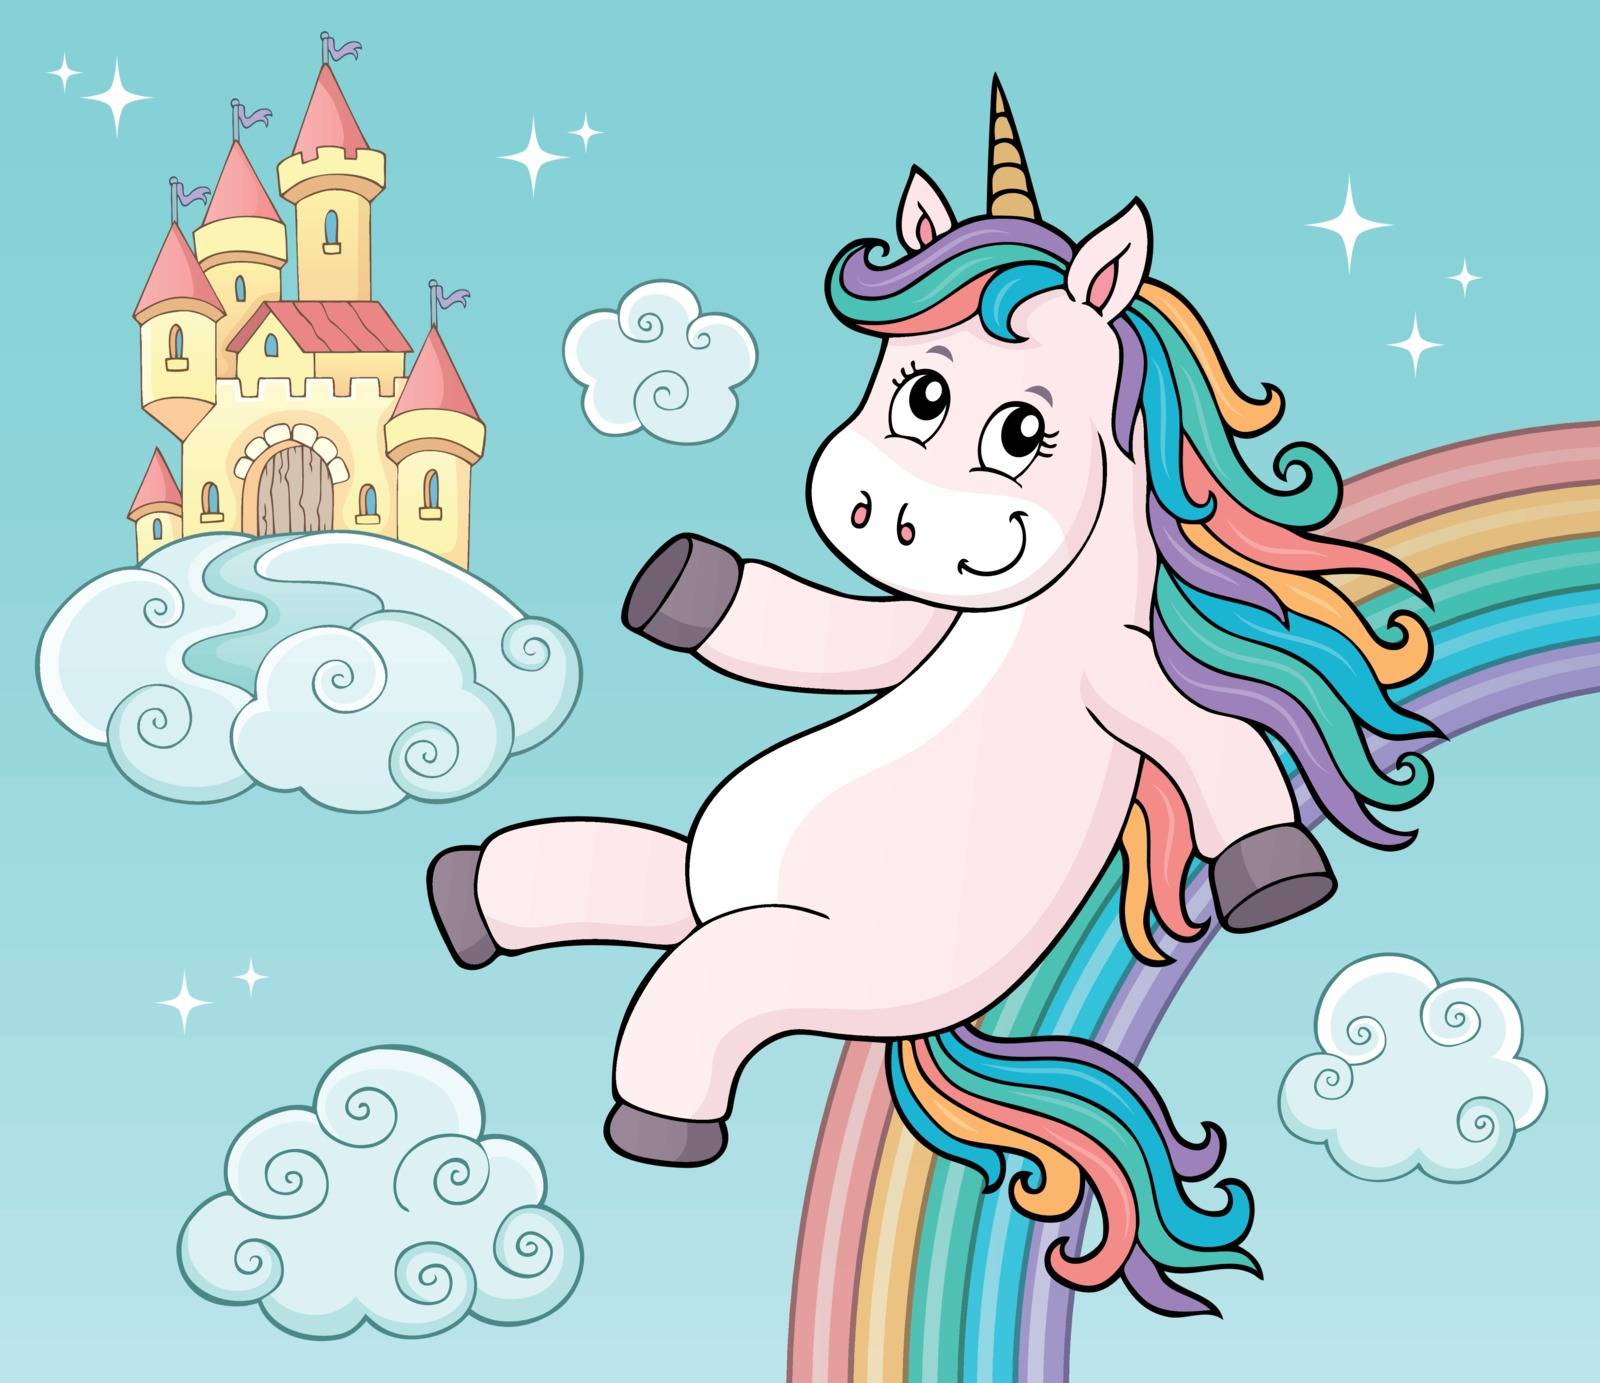 Cute unicorn topic image 5 - eps10 vector illustration.